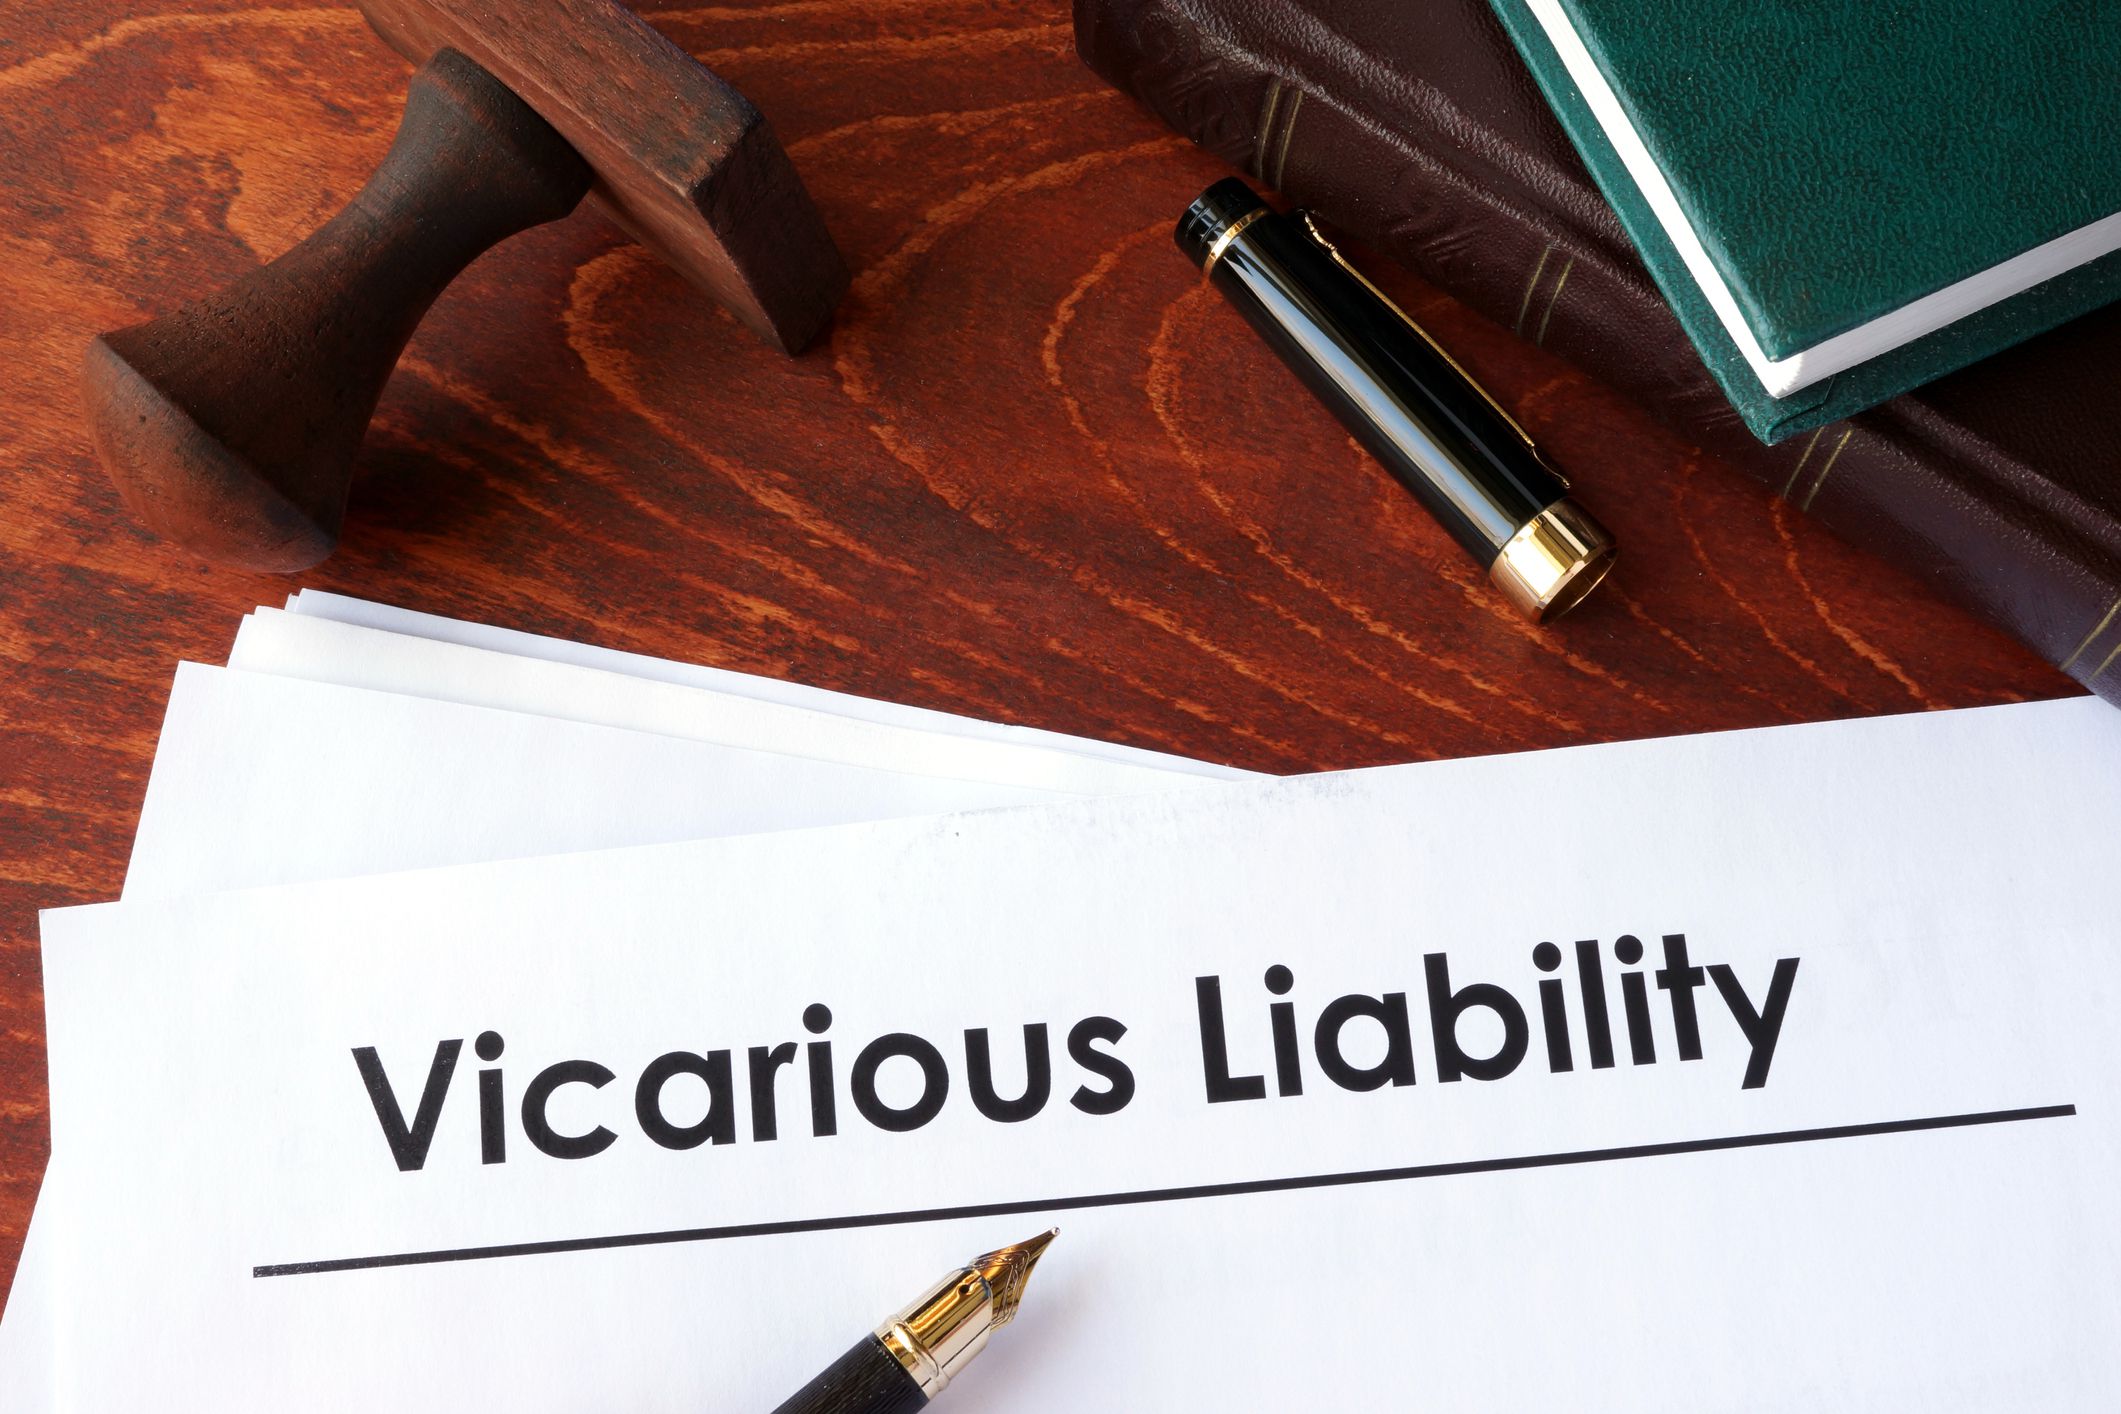 Vicarious liability insurance